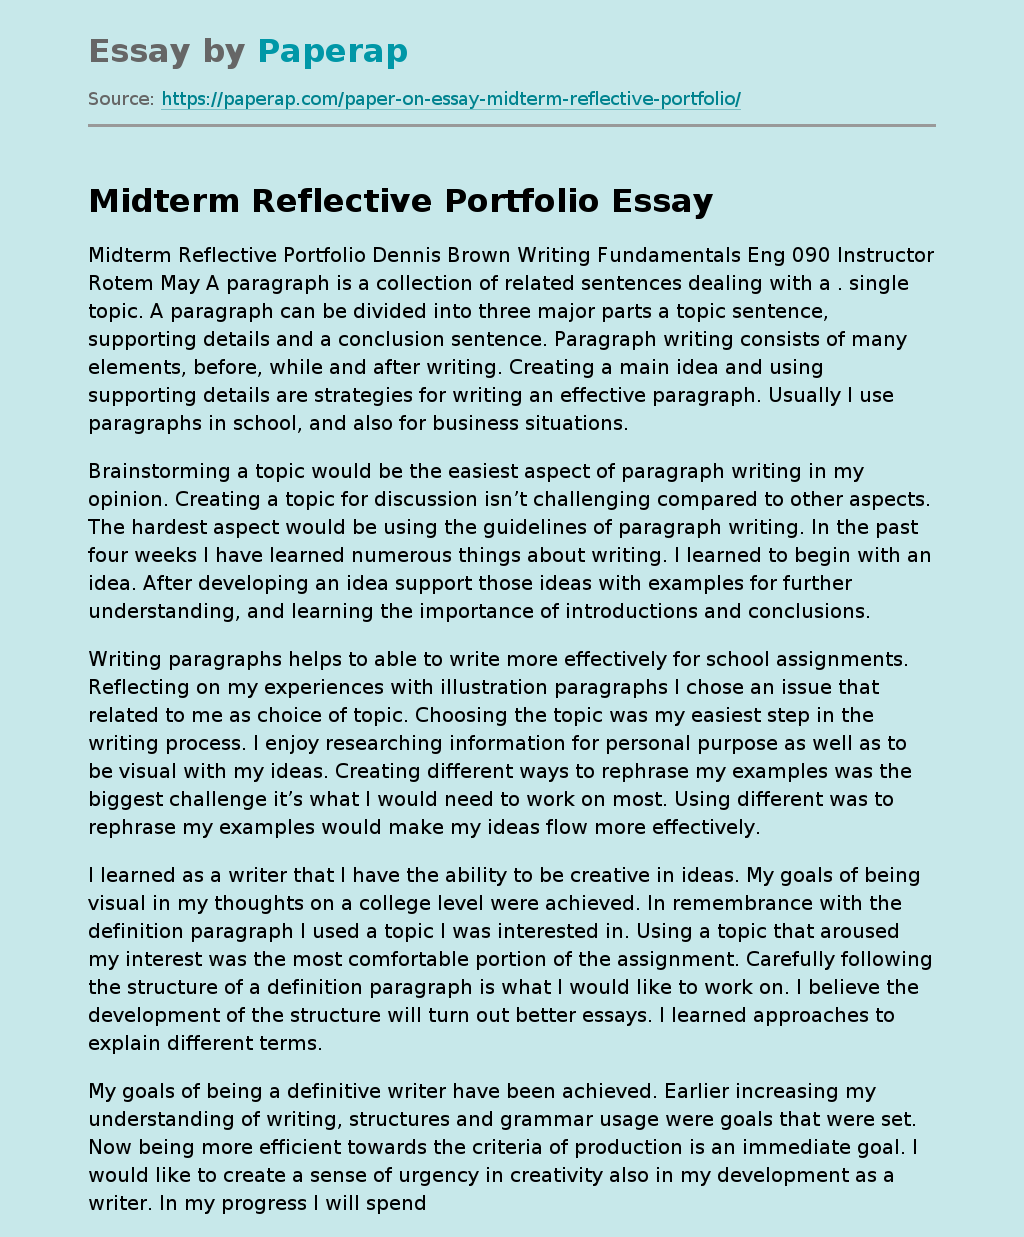 Midterm Reflective Portfolio